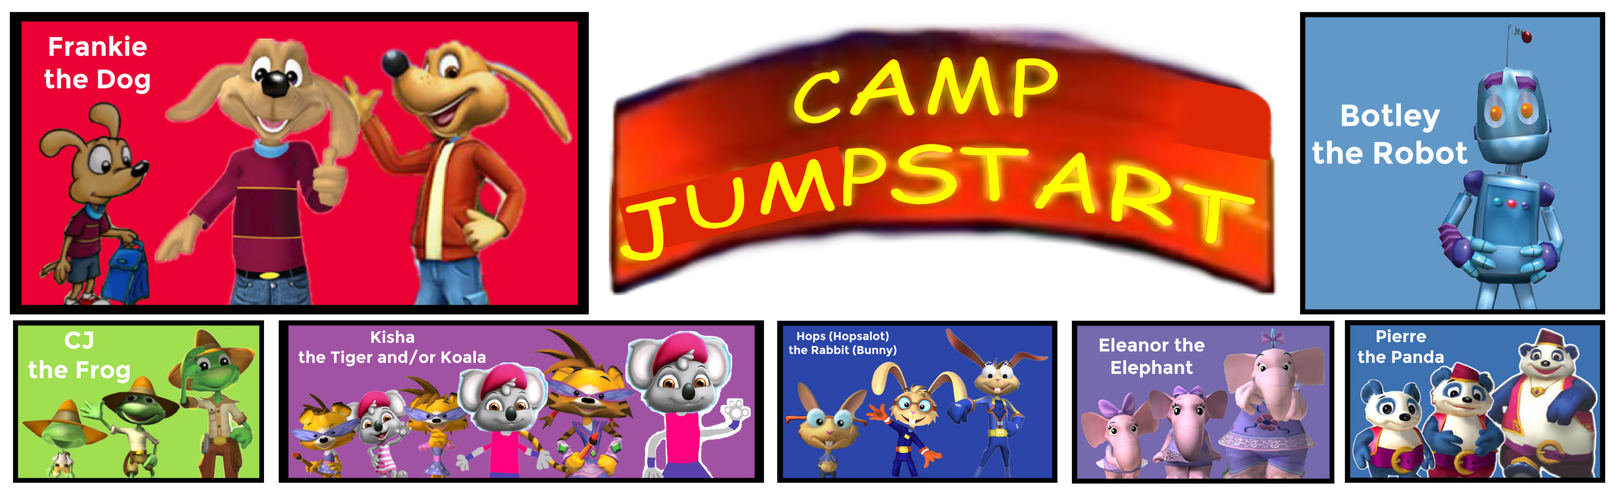 JumpStart Games Rewritten Coming Soon by MarkPipi on DeviantArt